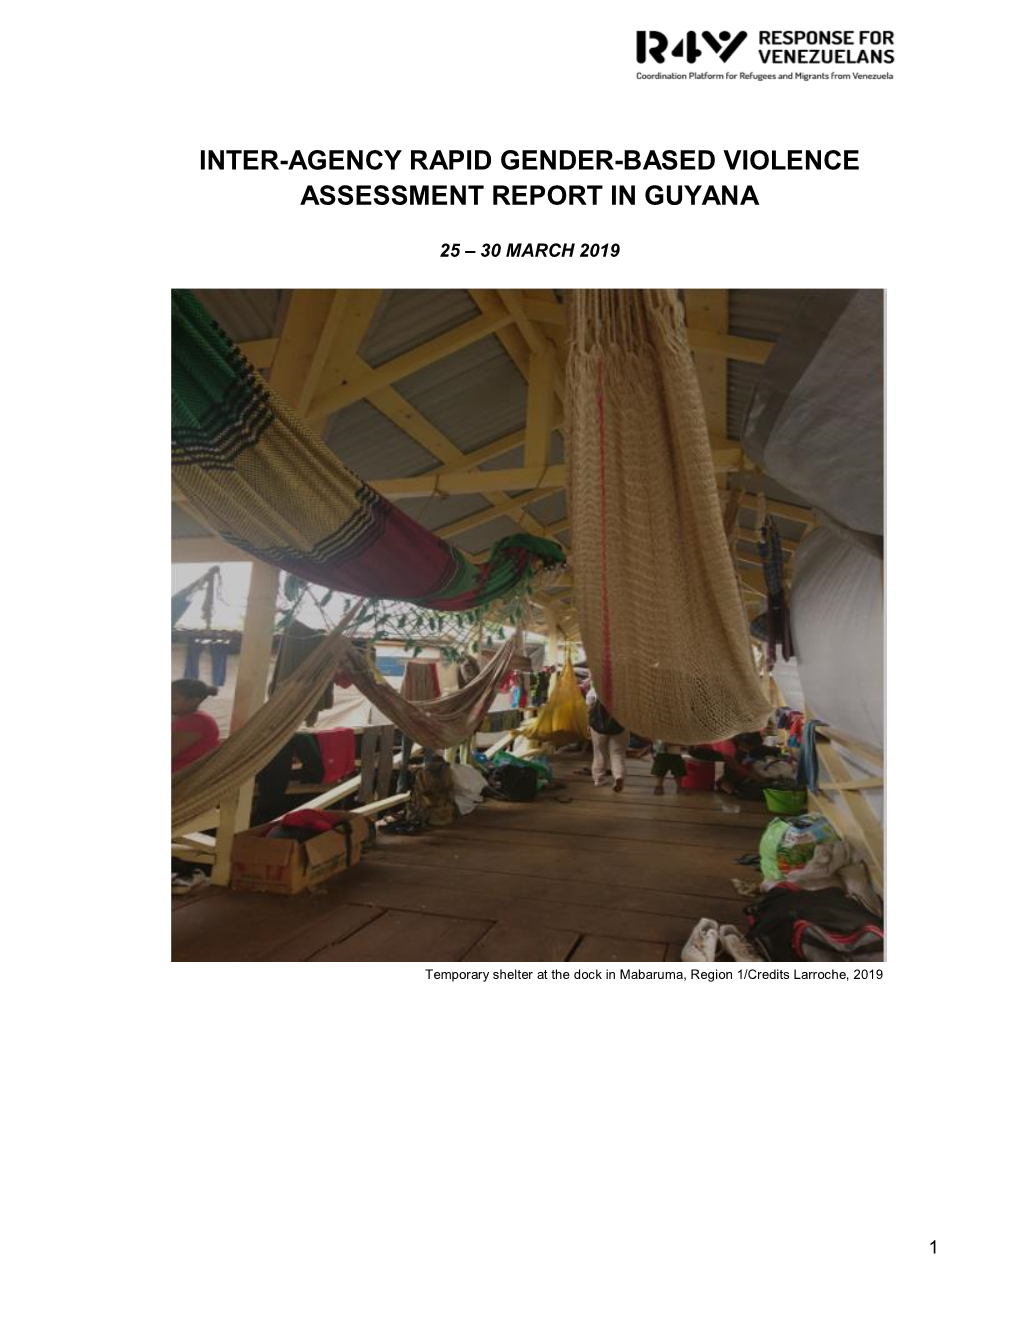 Inter-Agency Rapid Gender-Based Violence Assessment Report in Guyana